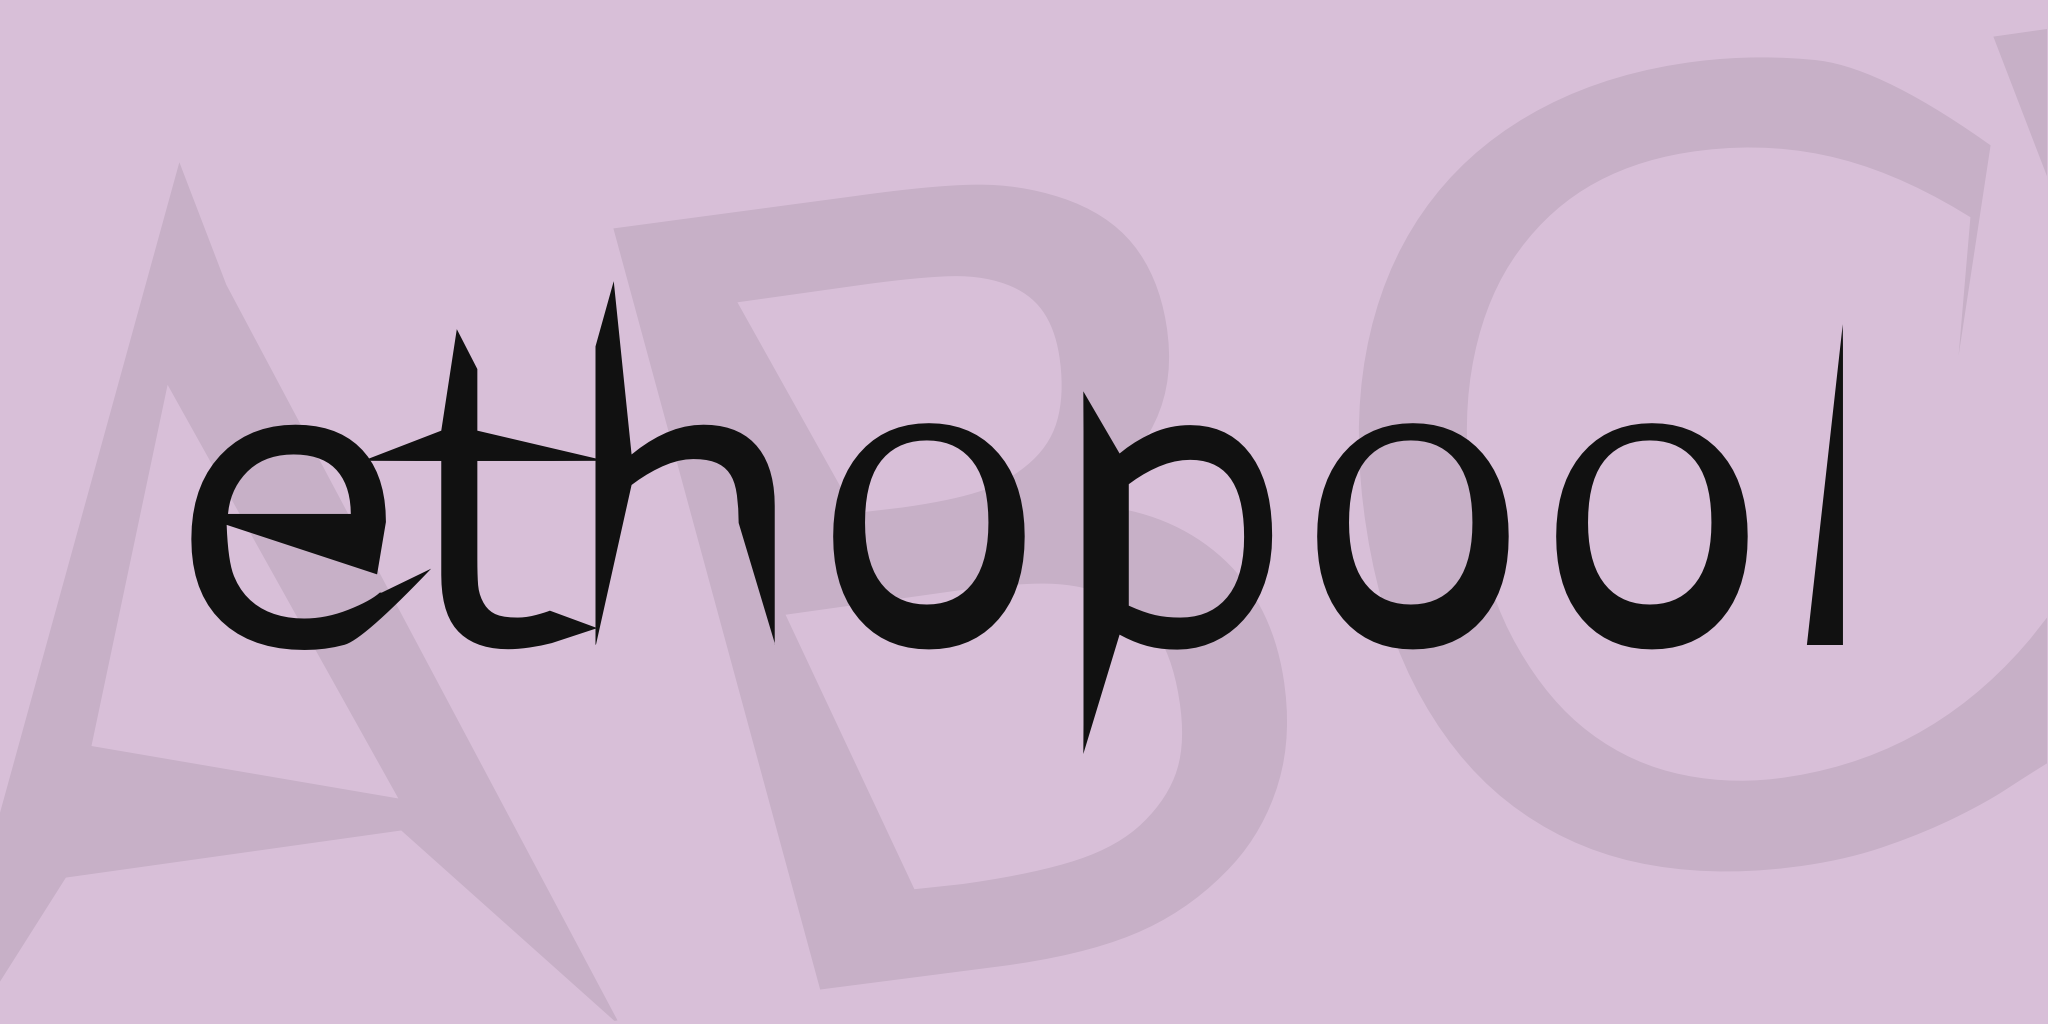 Ethopool